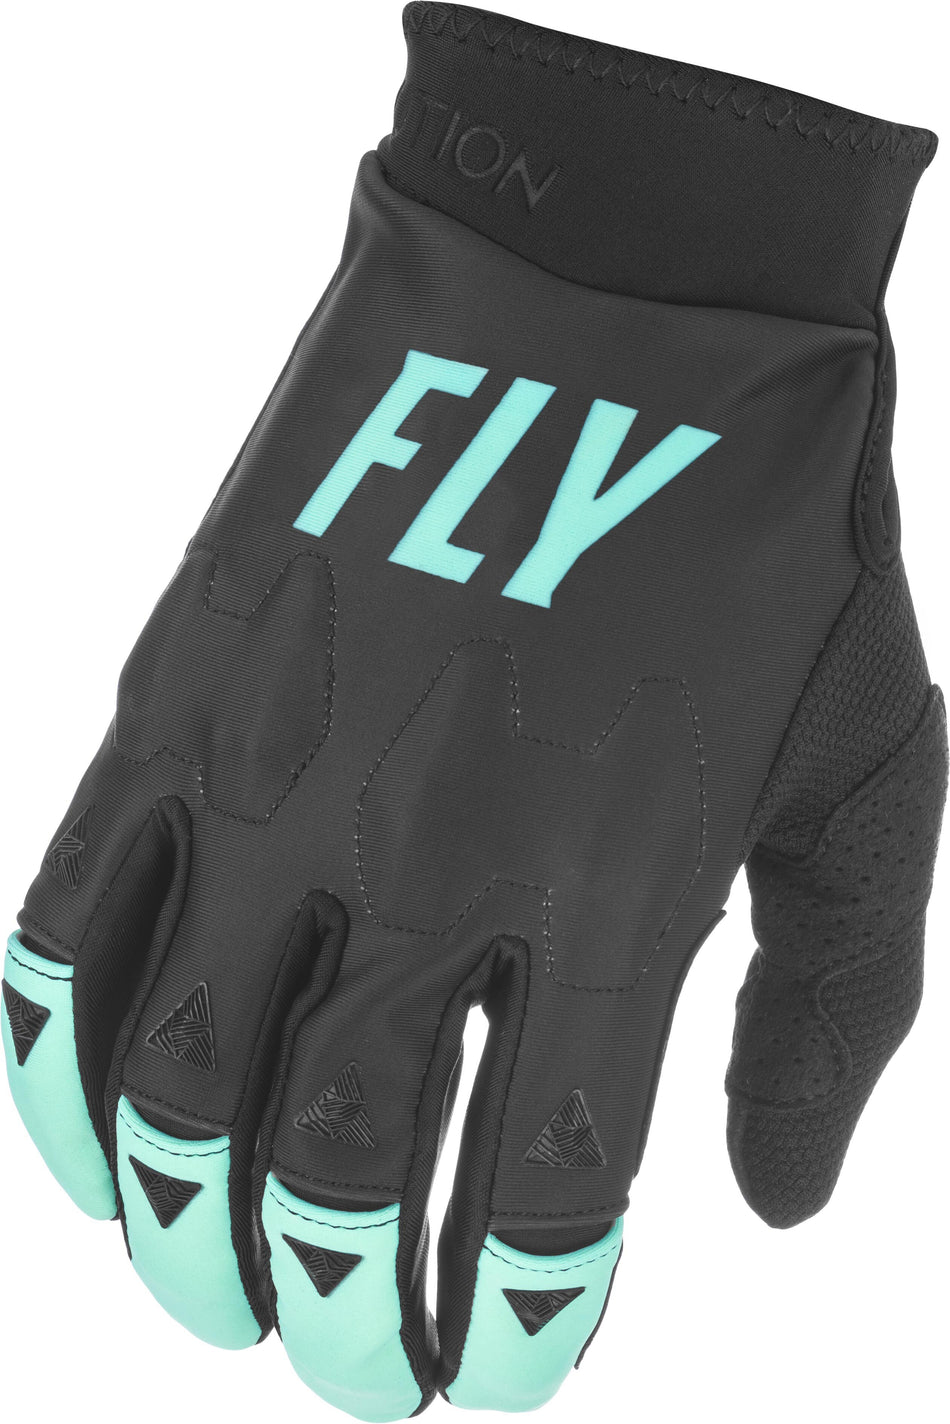 FLY RACING Evolution Dst L.E. Gloves Mint/Black Sz 13 374-11913